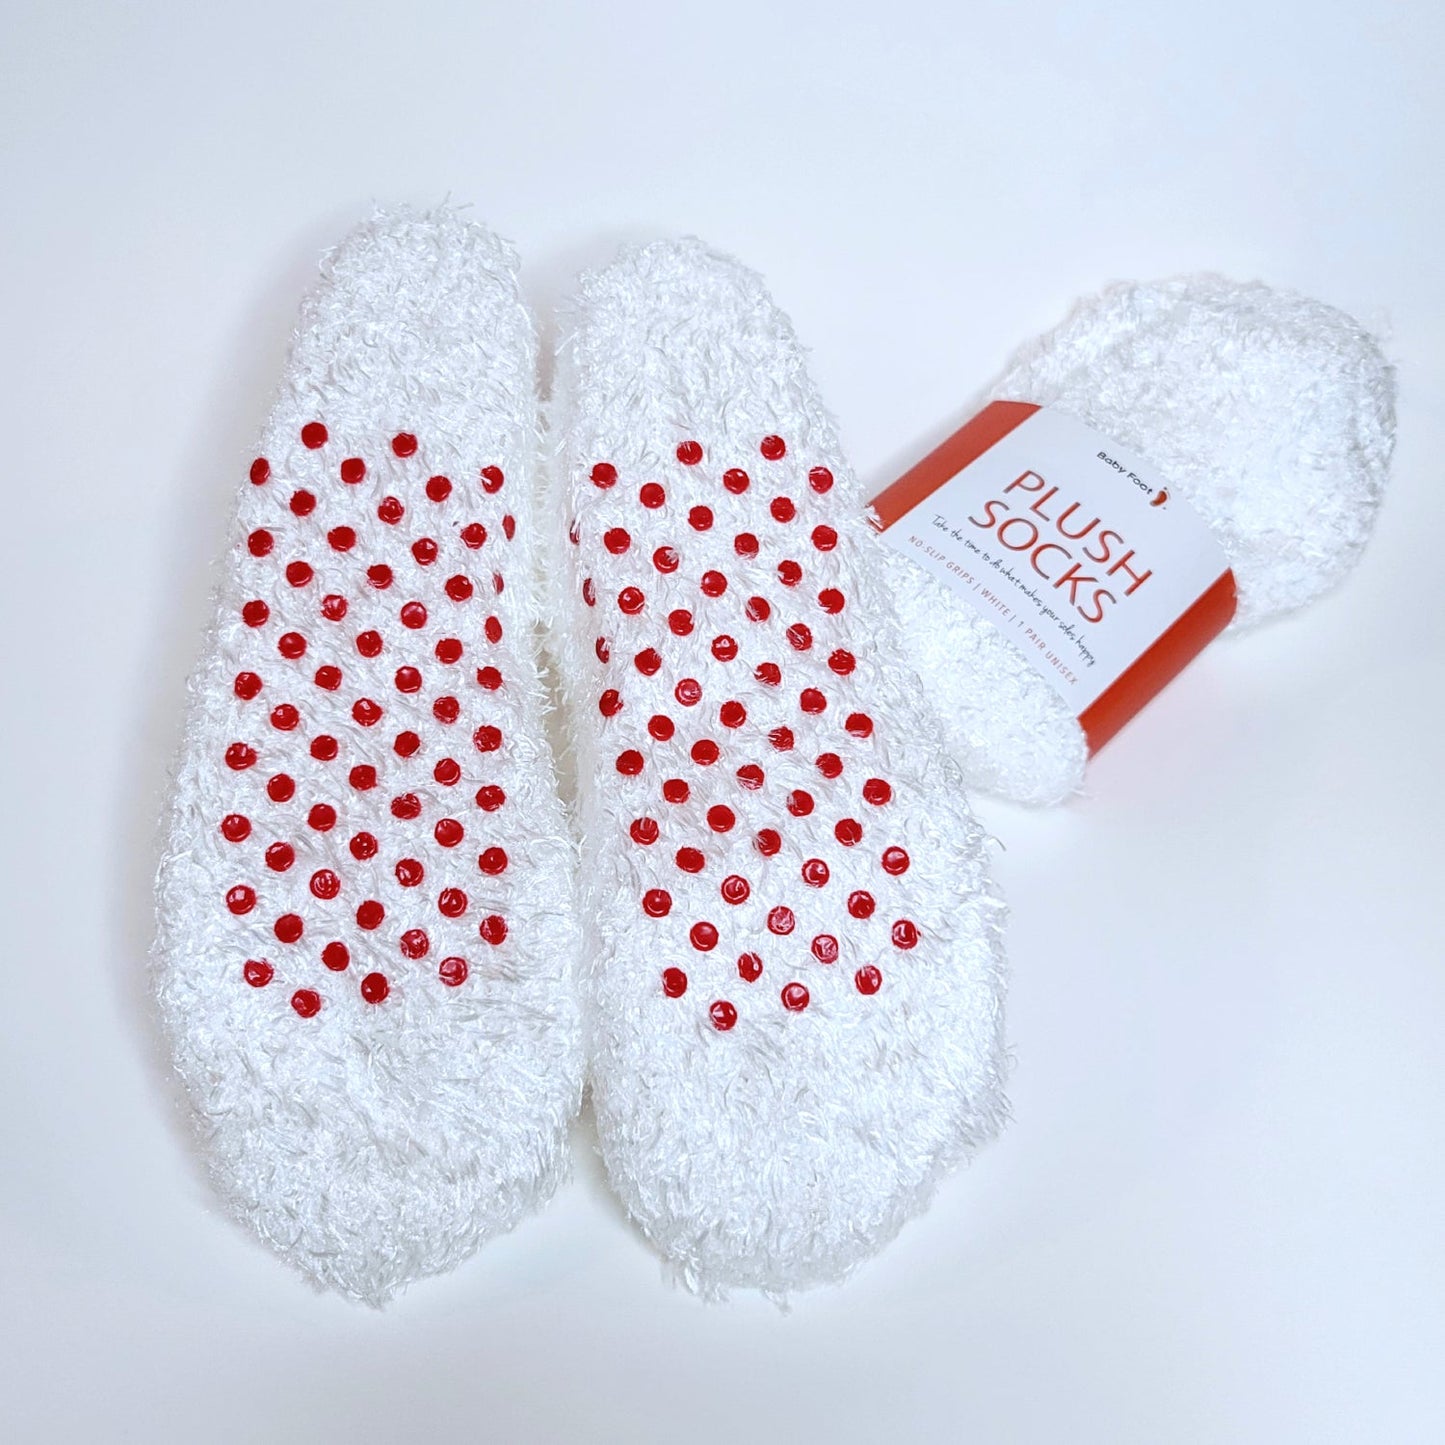 Baby Foot Moisturizing Foot Mask and White Plush Socks